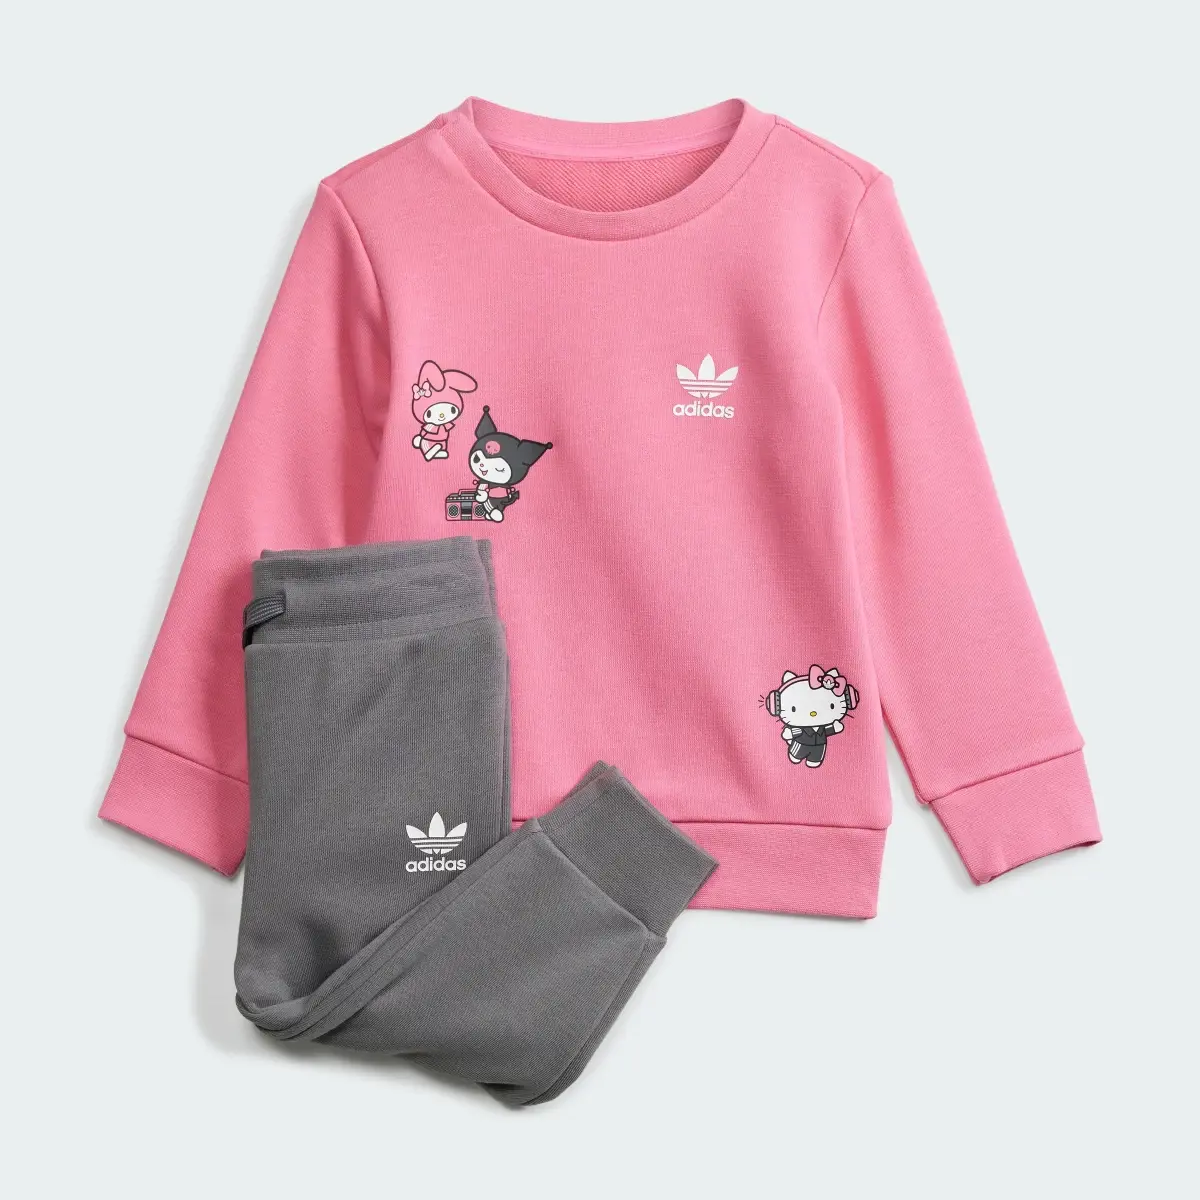 Adidas Originals x Hello Kitty Crew Set. 2